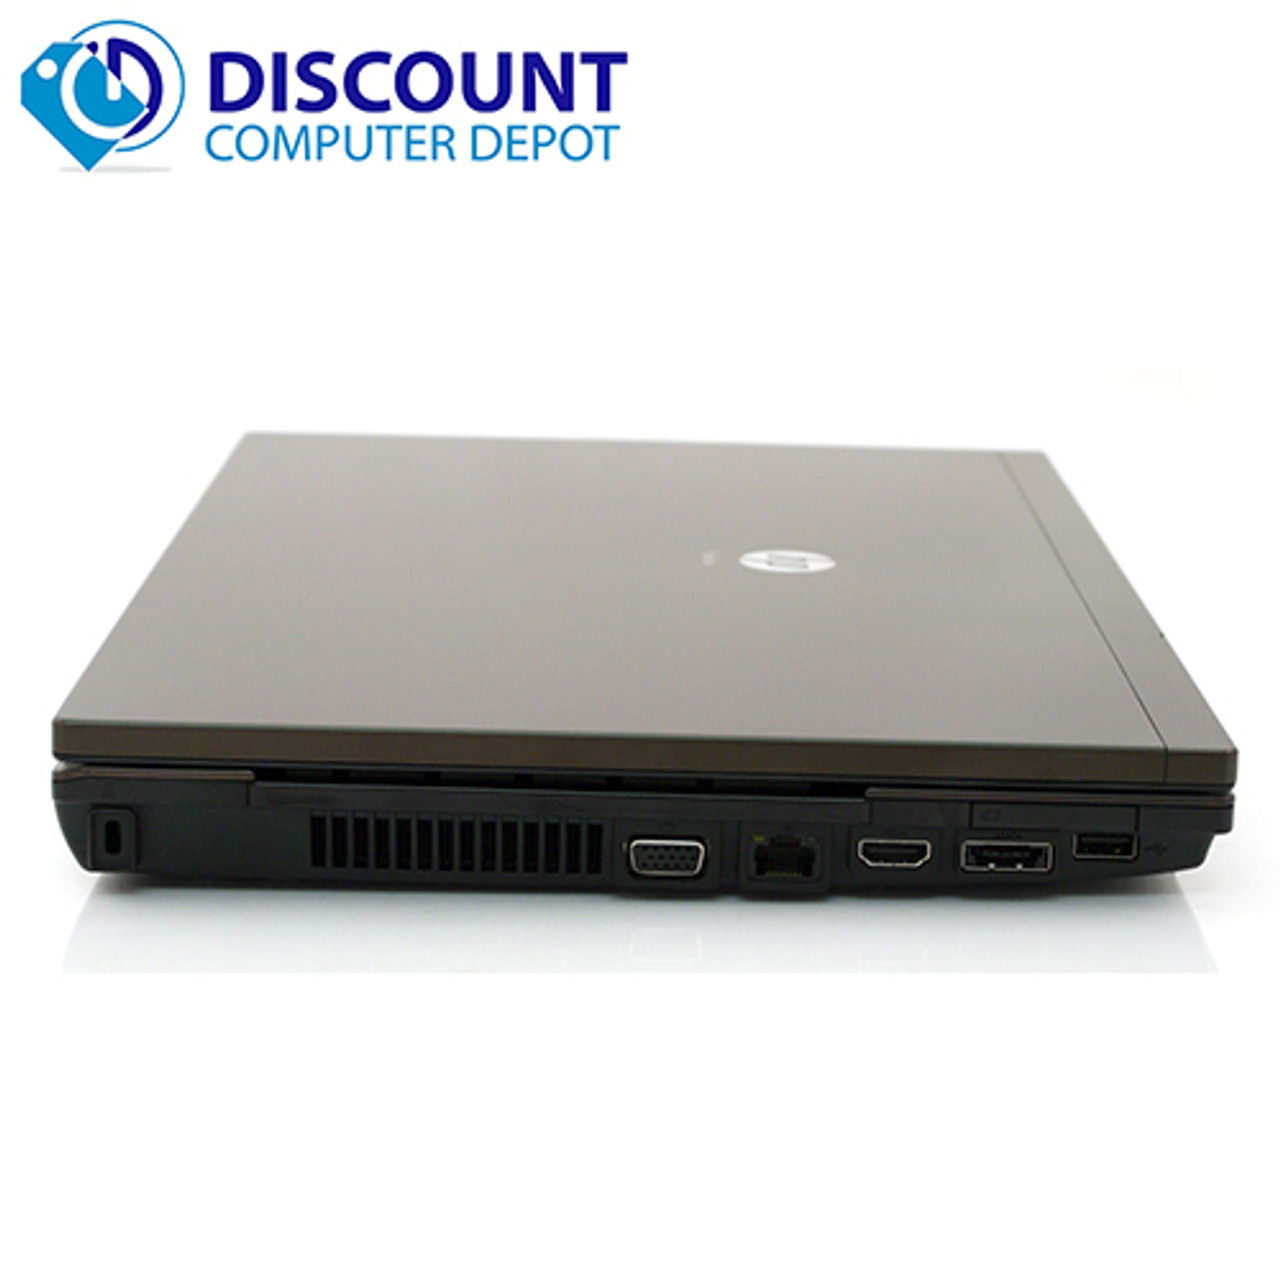 HP Probook 4520s 15.6" Laptop Windows 10 Home Intel i3 2.53GHz 4GB 320GB Hard Drive DVD WiFi Power Adapter